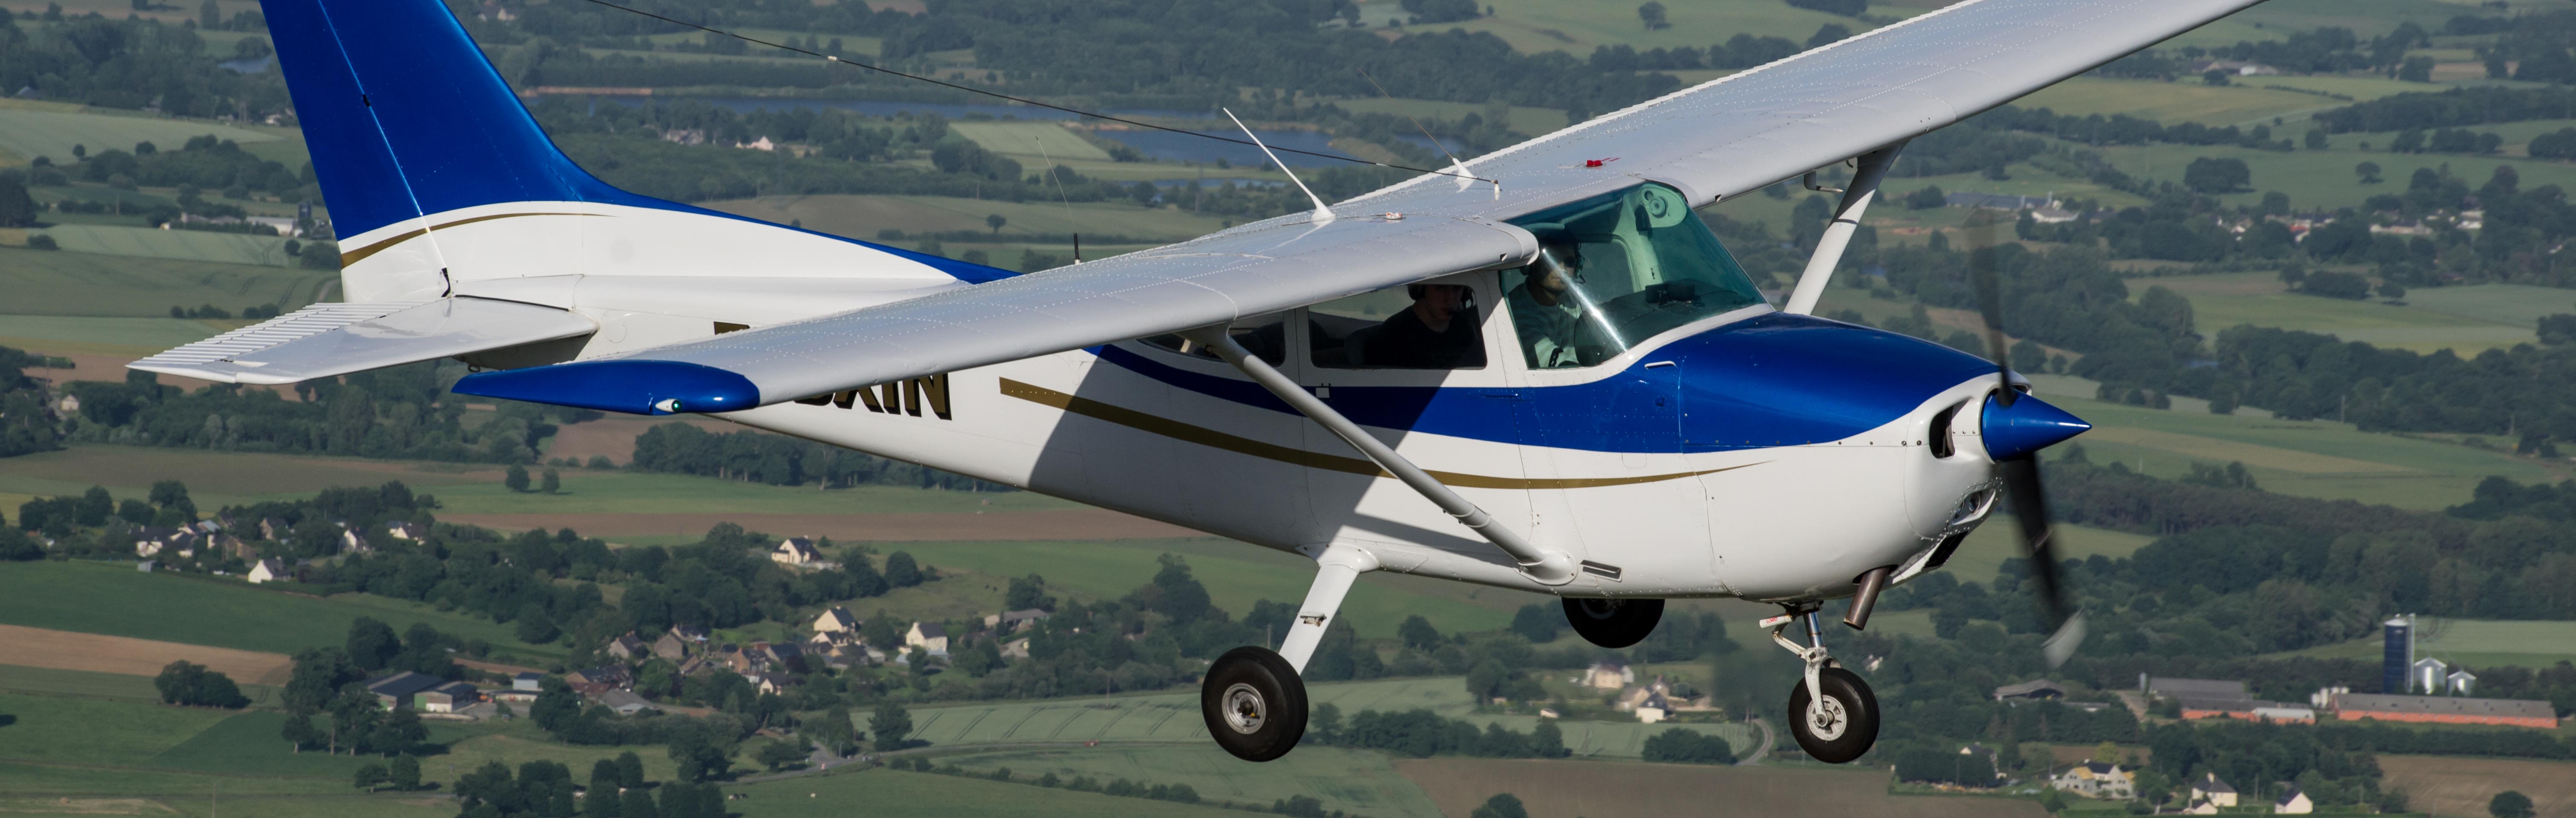 Discovery Pass Airplane Piloting